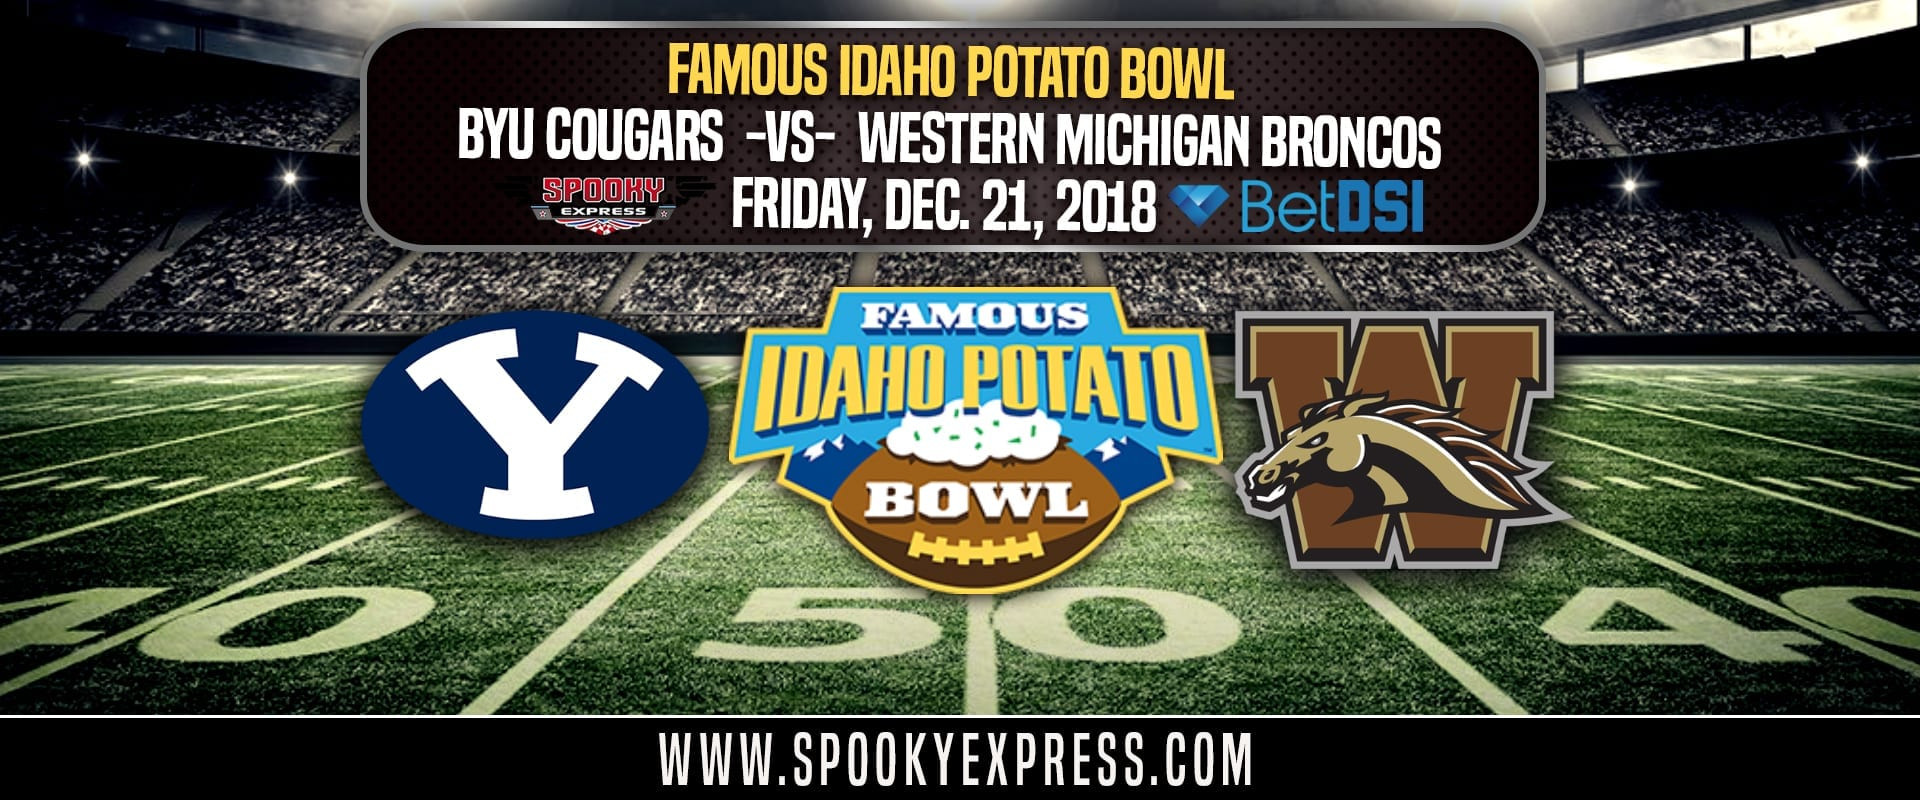 Idaho Potato Bowl
 2018 Famous Idaho Potato Bowl Betting Preview BYU vs